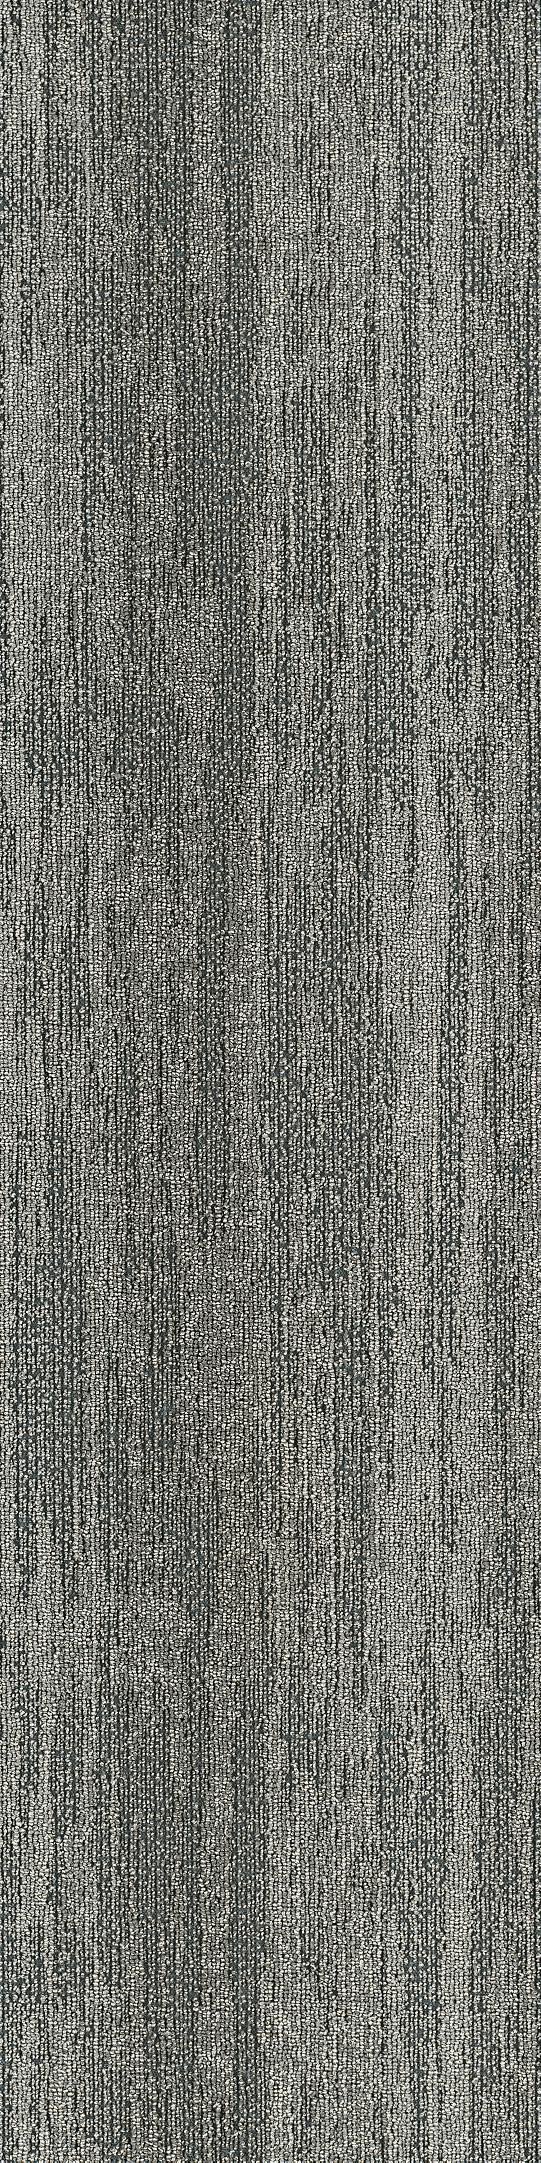 Shaw Alloy Shimmer Carpet Tile - Nickel Graphite